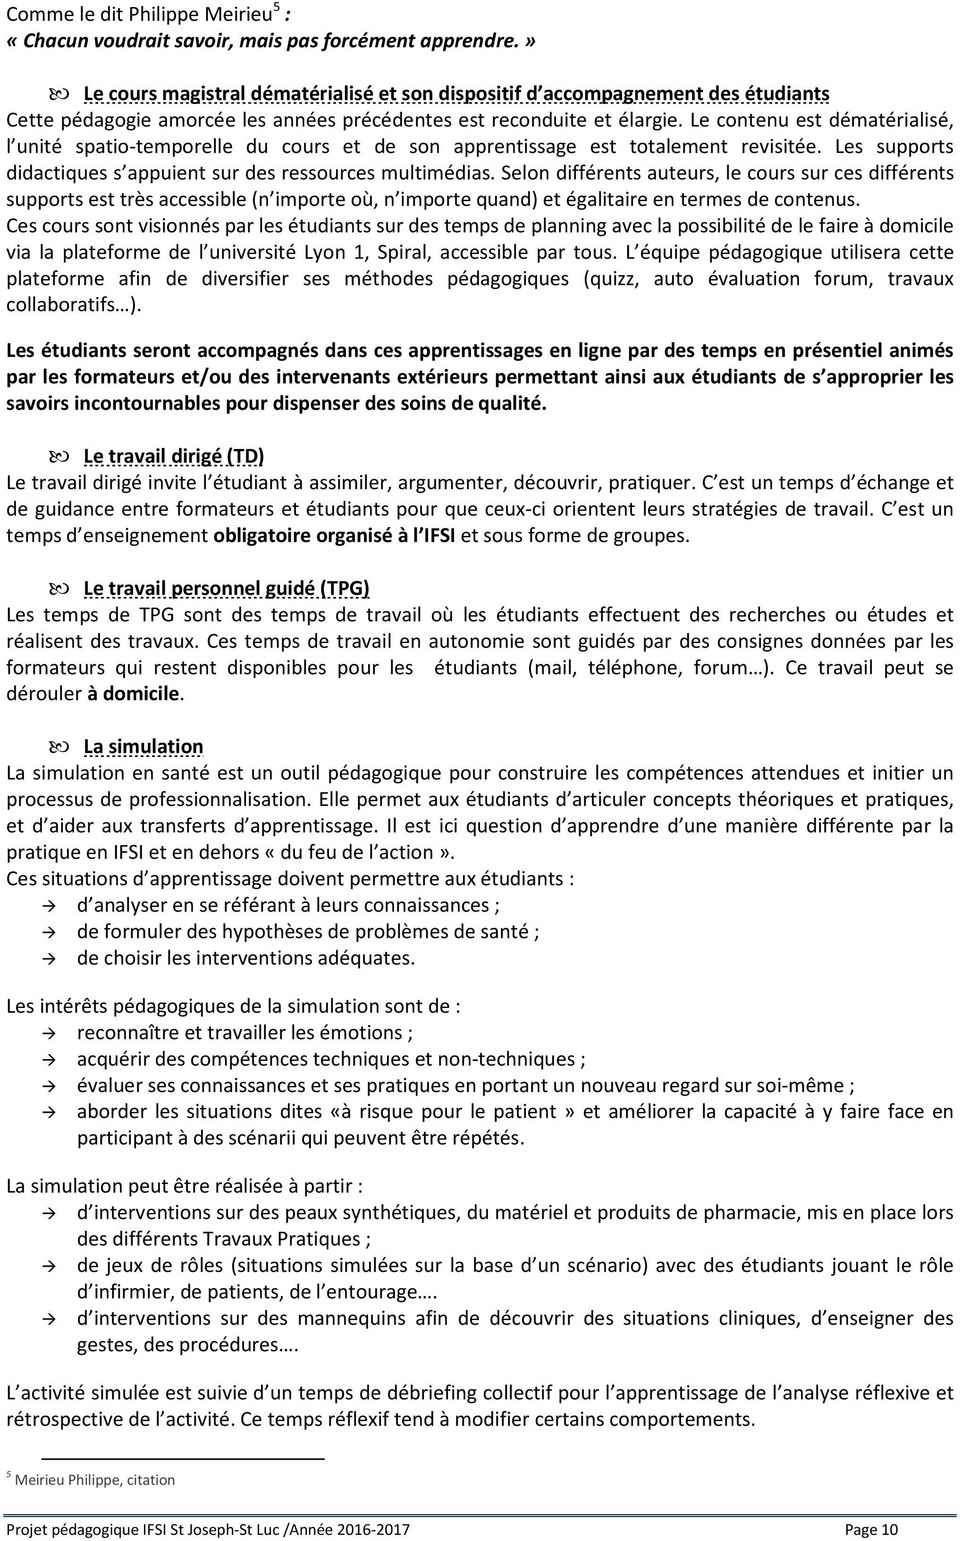 Institut De Formation En Soins Infirmiers Joseph Lepercq Pdf Free Download